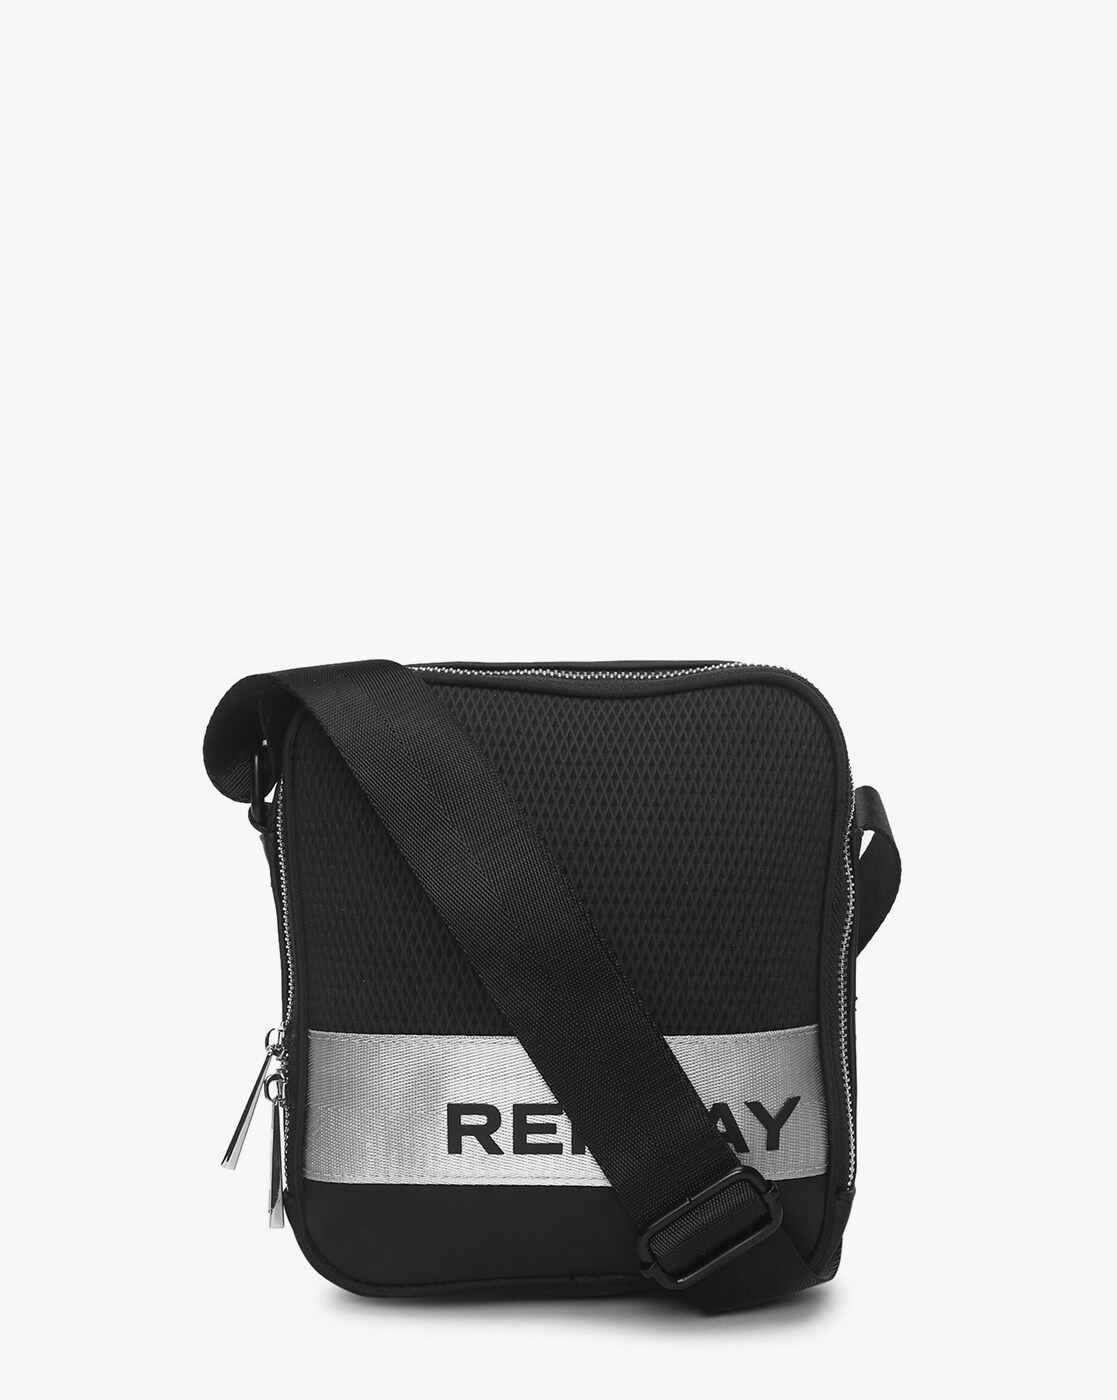 Buy BAIGIO Men's Genuine Leather Messenger Bag Shoulder Bag Briefcase  Messenger Crossbody Handbag Satchel Travel bag Man Purse Sling Casual Day  Pack, Coffee at Amazon.in